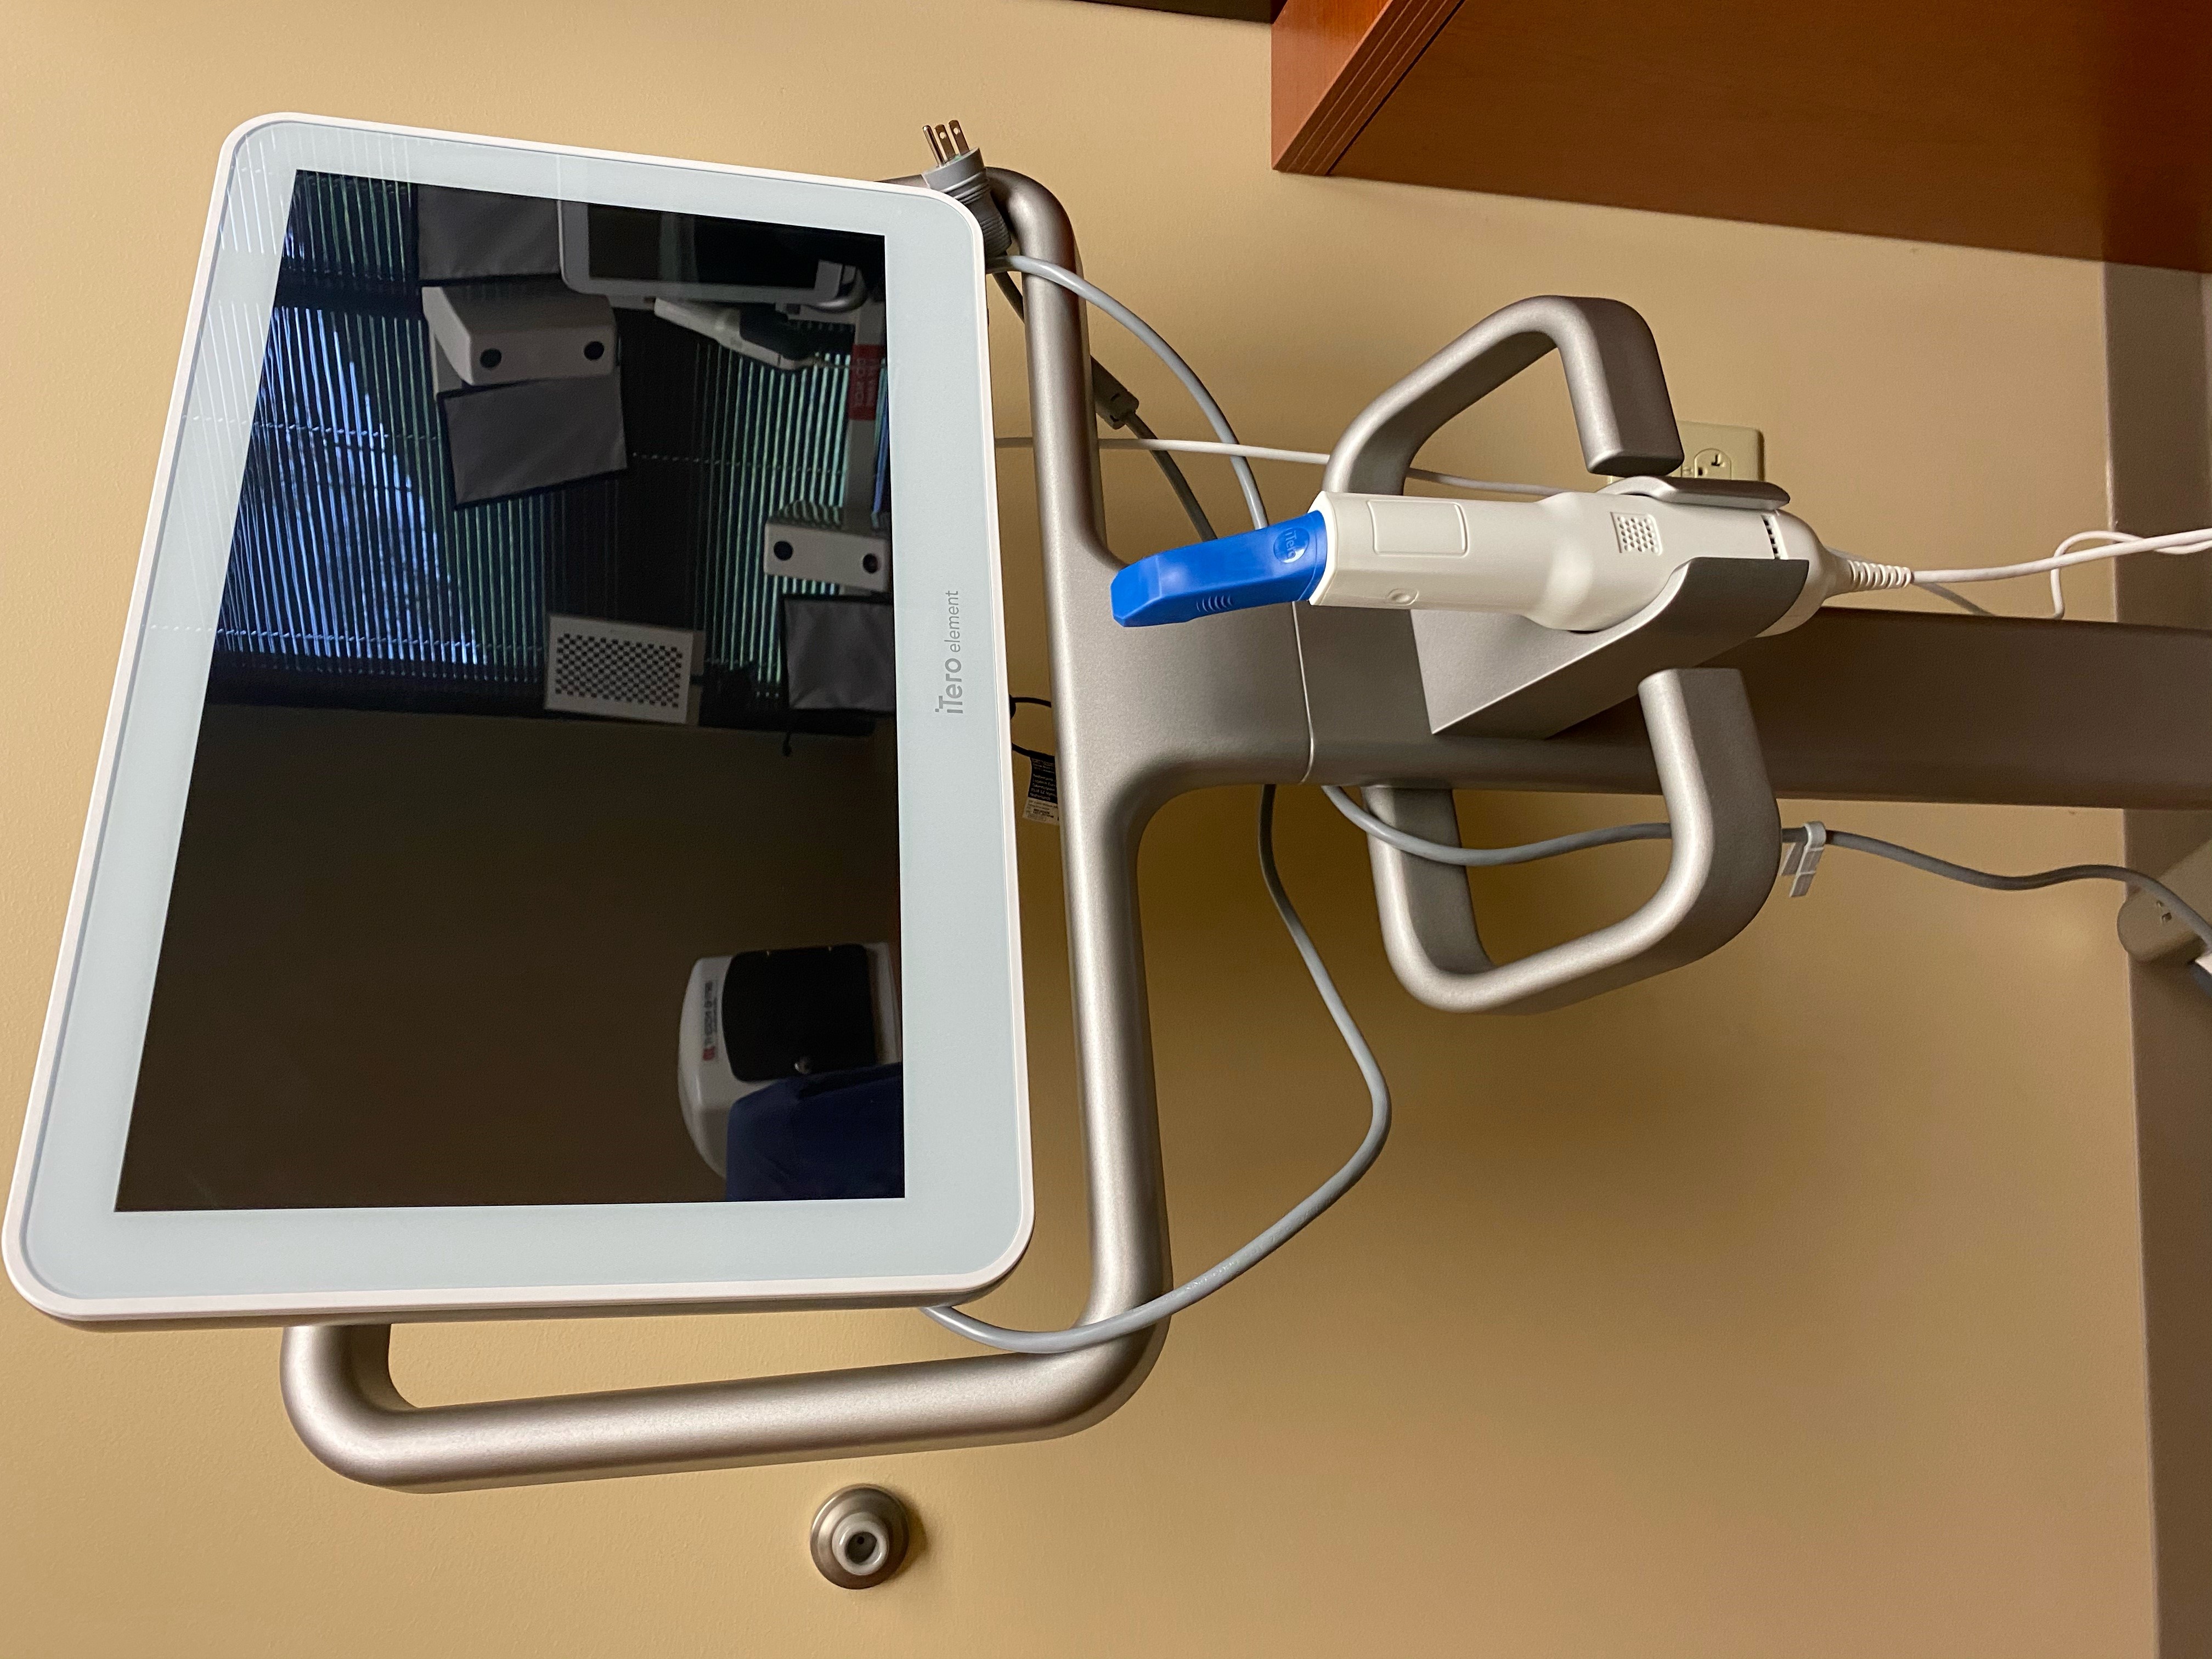 iTero intraoral scanning equipment